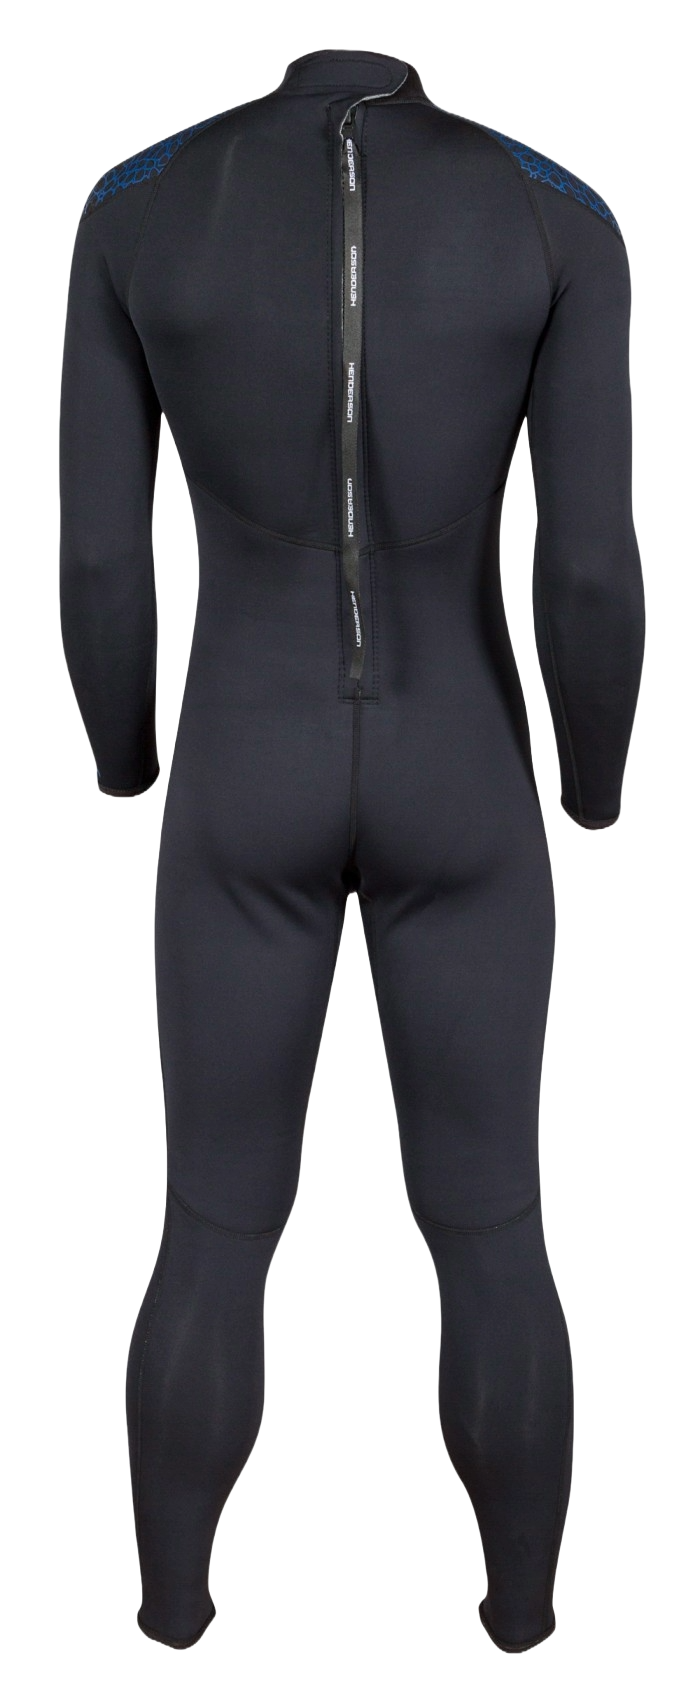 Henderson TherMaxxx Men's Wetsuit Black/Blue Back